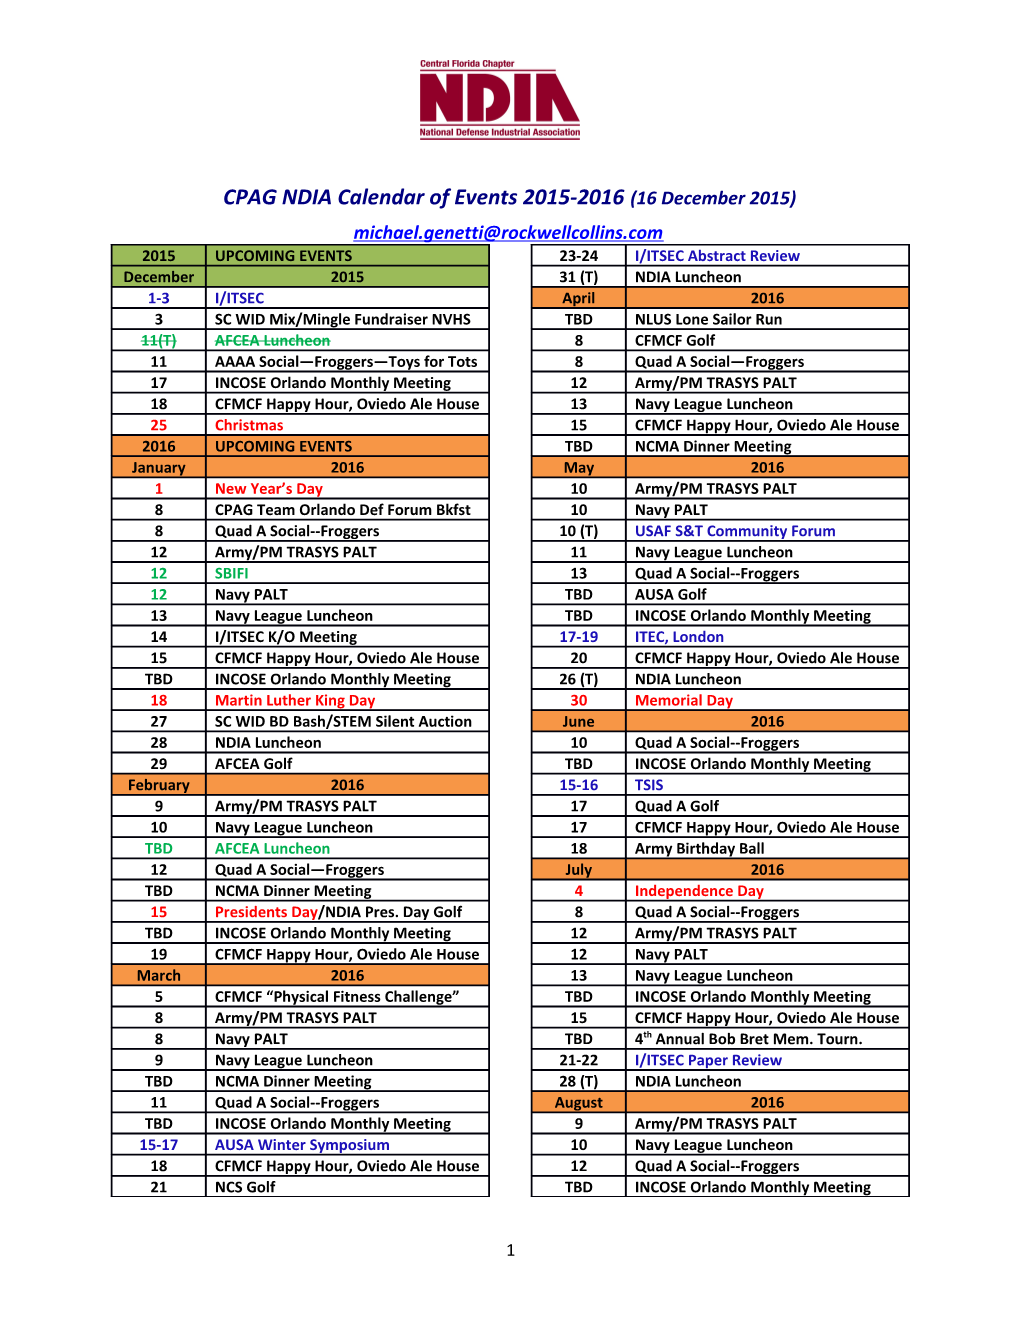 CPAG NDIA Calendar of Events 2015-2016(16 December 2015)